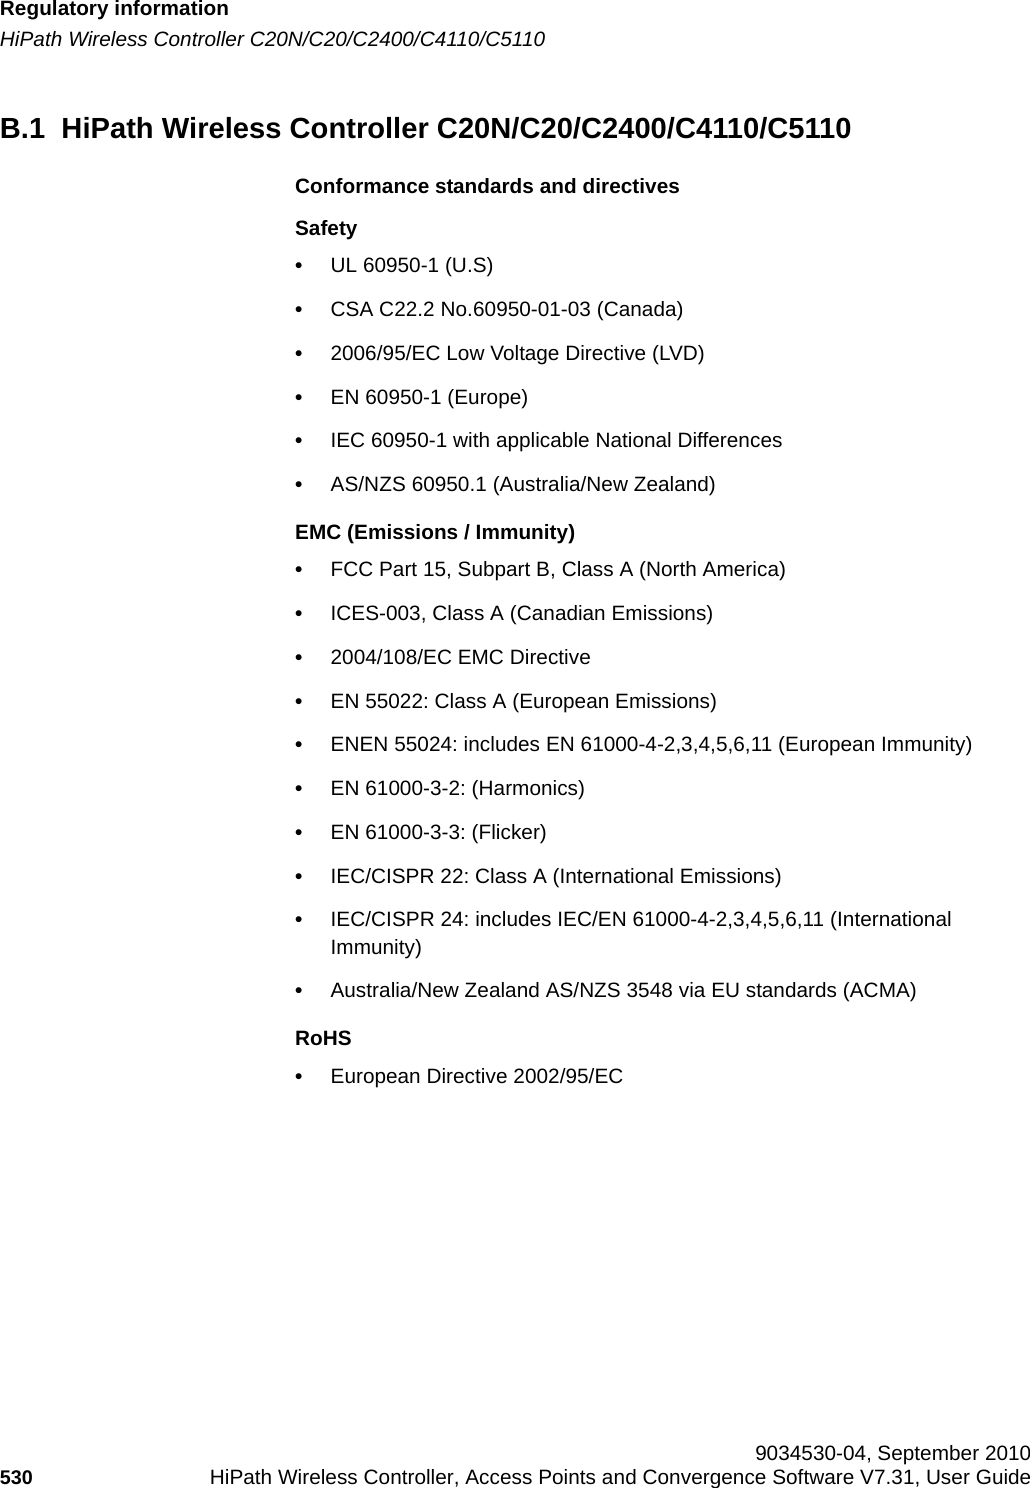 Regulatory informationhwc_appendixb.fmHiPath Wireless Controller C20N/C20/C2400/C4110/C5110 9034530-04, September 2010530 HiPath Wireless Controller, Access Points and Convergence Software V7.31, User Guide        B.1  HiPath Wireless Controller C20N/C20/C2400/C4110/C5110Conformance standards and directivesSafety•UL 60950-1 (U.S)•CSA C22.2 No.60950-01-03 (Canada)•2006/95/EC Low Voltage Directive (LVD)•EN 60950-1 (Europe)•IEC 60950-1 with applicable National Differences•AS/NZS 60950.1 (Australia/New Zealand)EMC (Emissions / Immunity)•FCC Part 15, Subpart B, Class A (North America)•ICES-003, Class A (Canadian Emissions)•2004/108/EC EMC Directive•EN 55022: Class A (European Emissions)•ENEN 55024: includes EN 61000-4-2,3,4,5,6,11 (European Immunity)•EN 61000-3-2: (Harmonics)•EN 61000-3-3: (Flicker)•IEC/CISPR 22: Class A (International Emissions)•IEC/CISPR 24: includes IEC/EN 61000-4-2,3,4,5,6,11 (International Immunity) •Australia/New Zealand AS/NZS 3548 via EU standards (ACMA)RoHS•European Directive 2002/95/EC